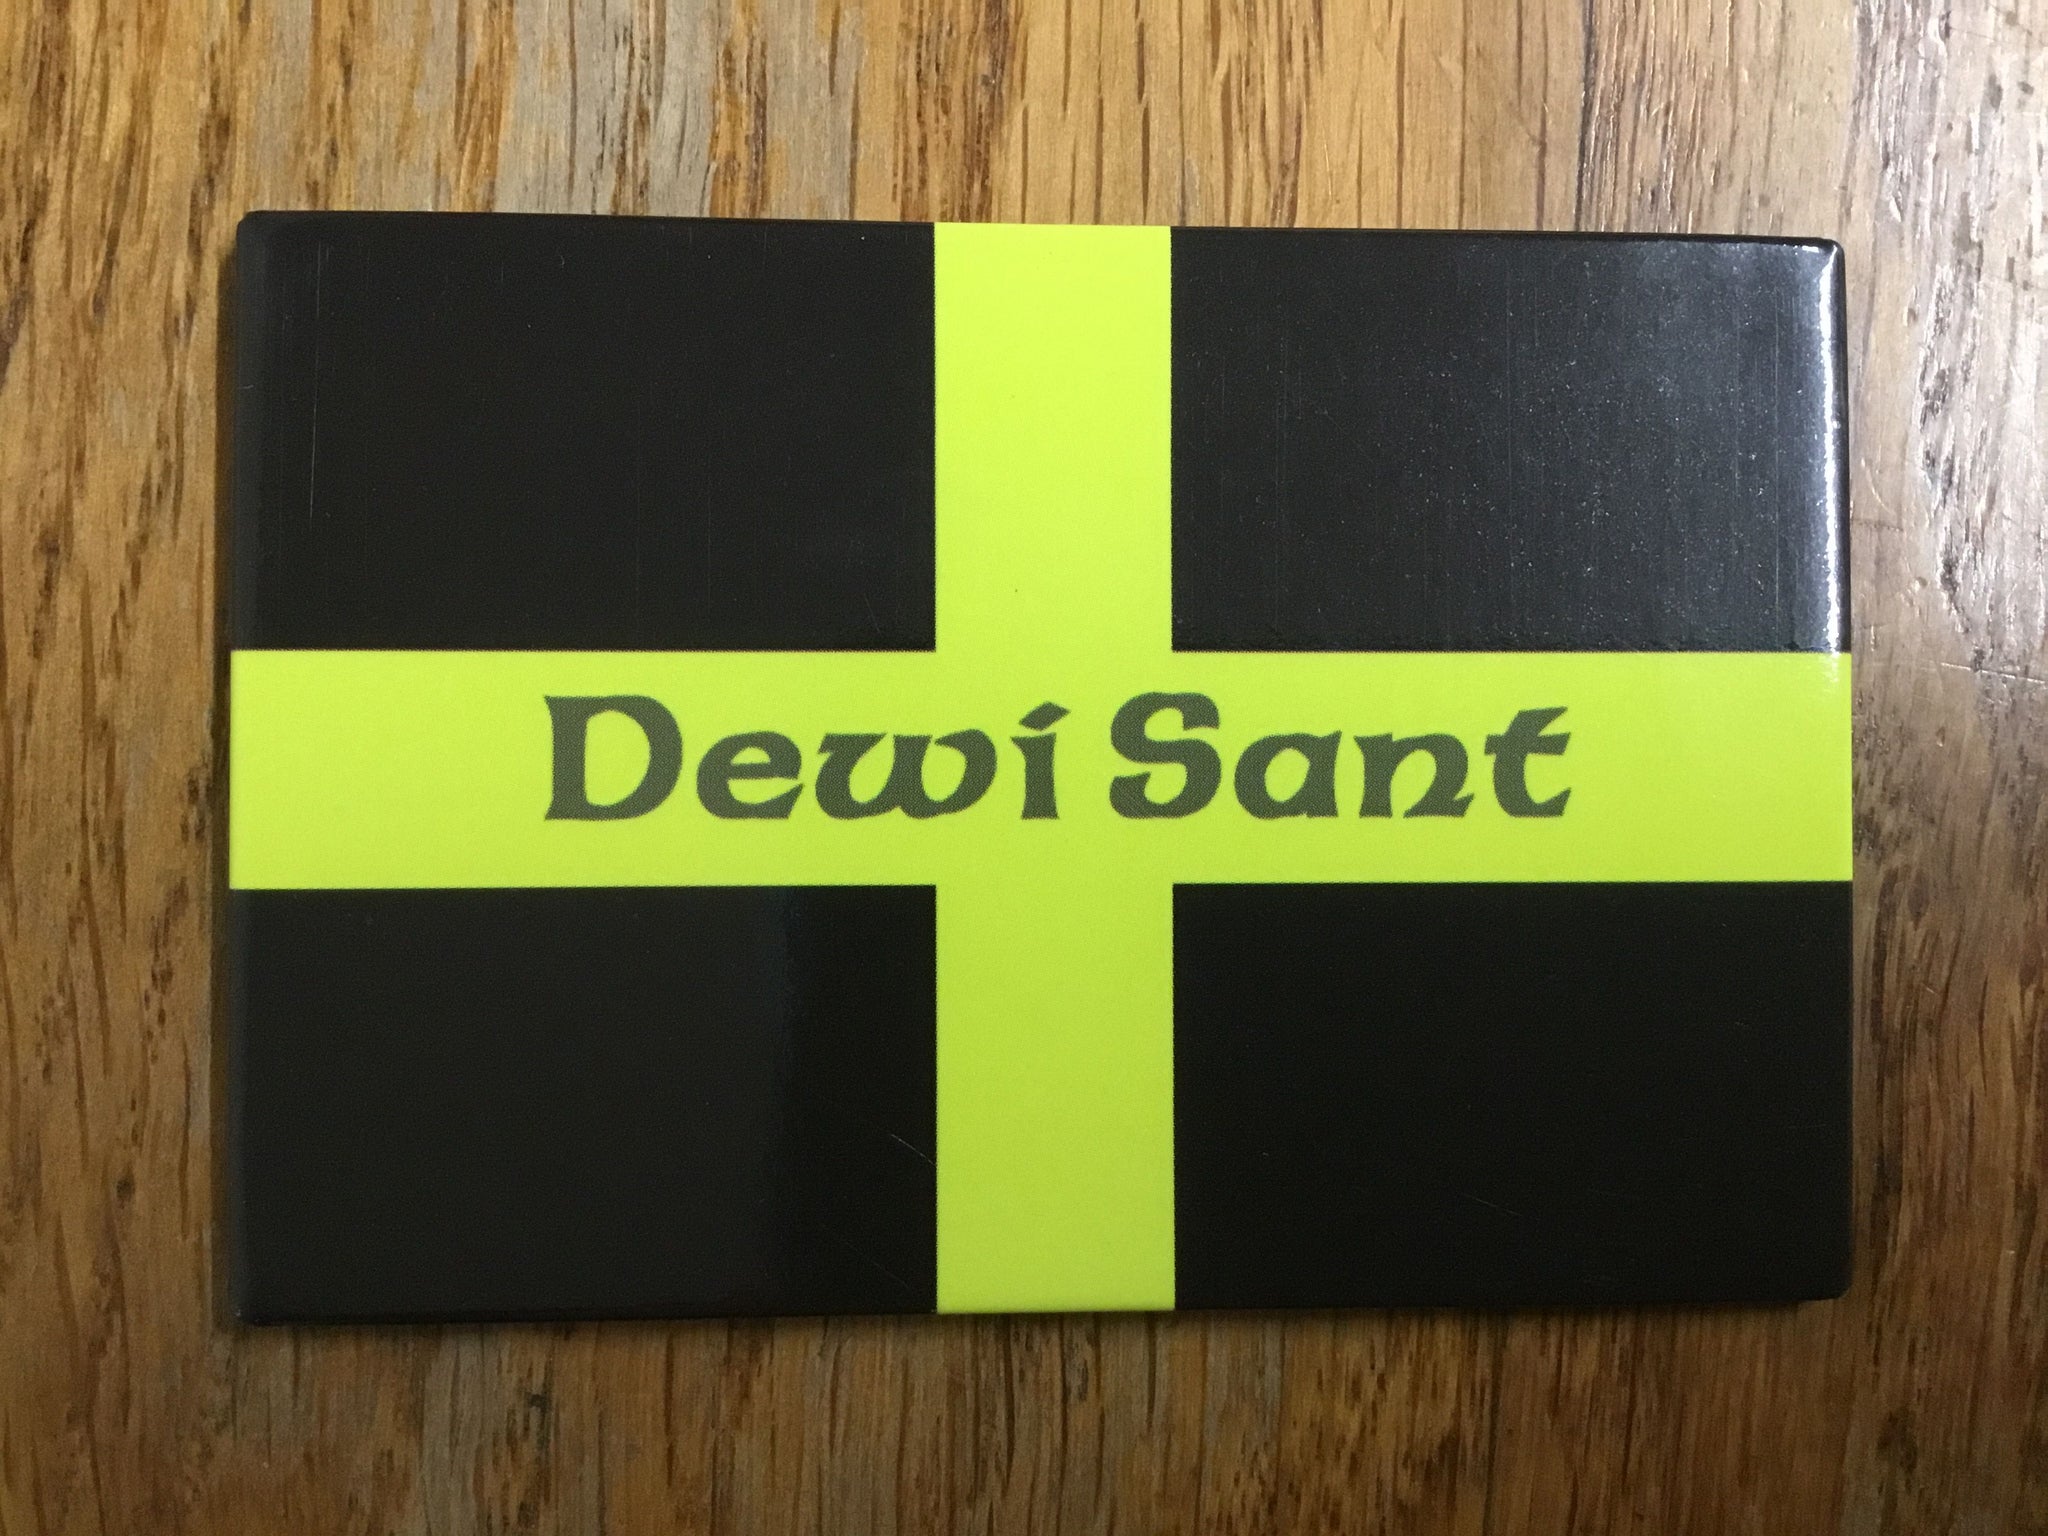 'The flag of Dewi Sant' (St David) fridge magnet